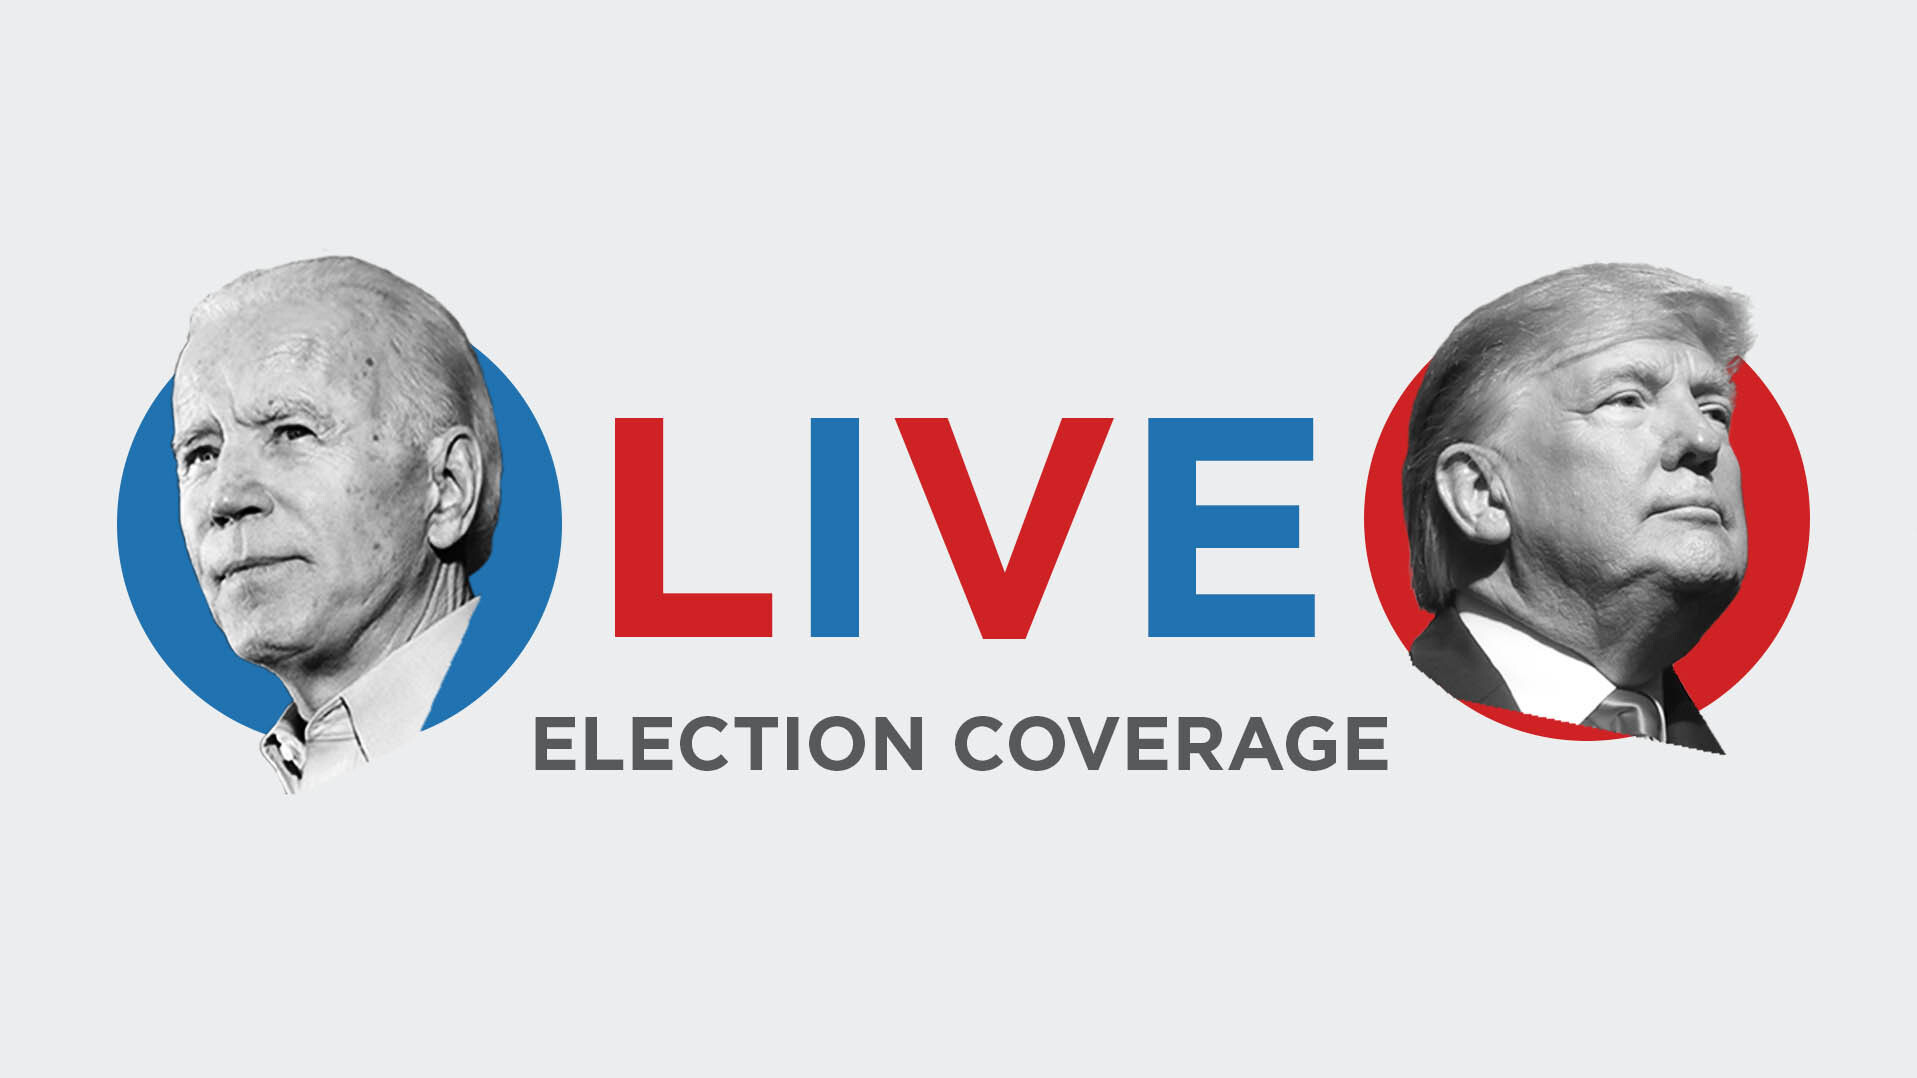 Live 2020 Election Updates From NPR: Joe Biden Has Won